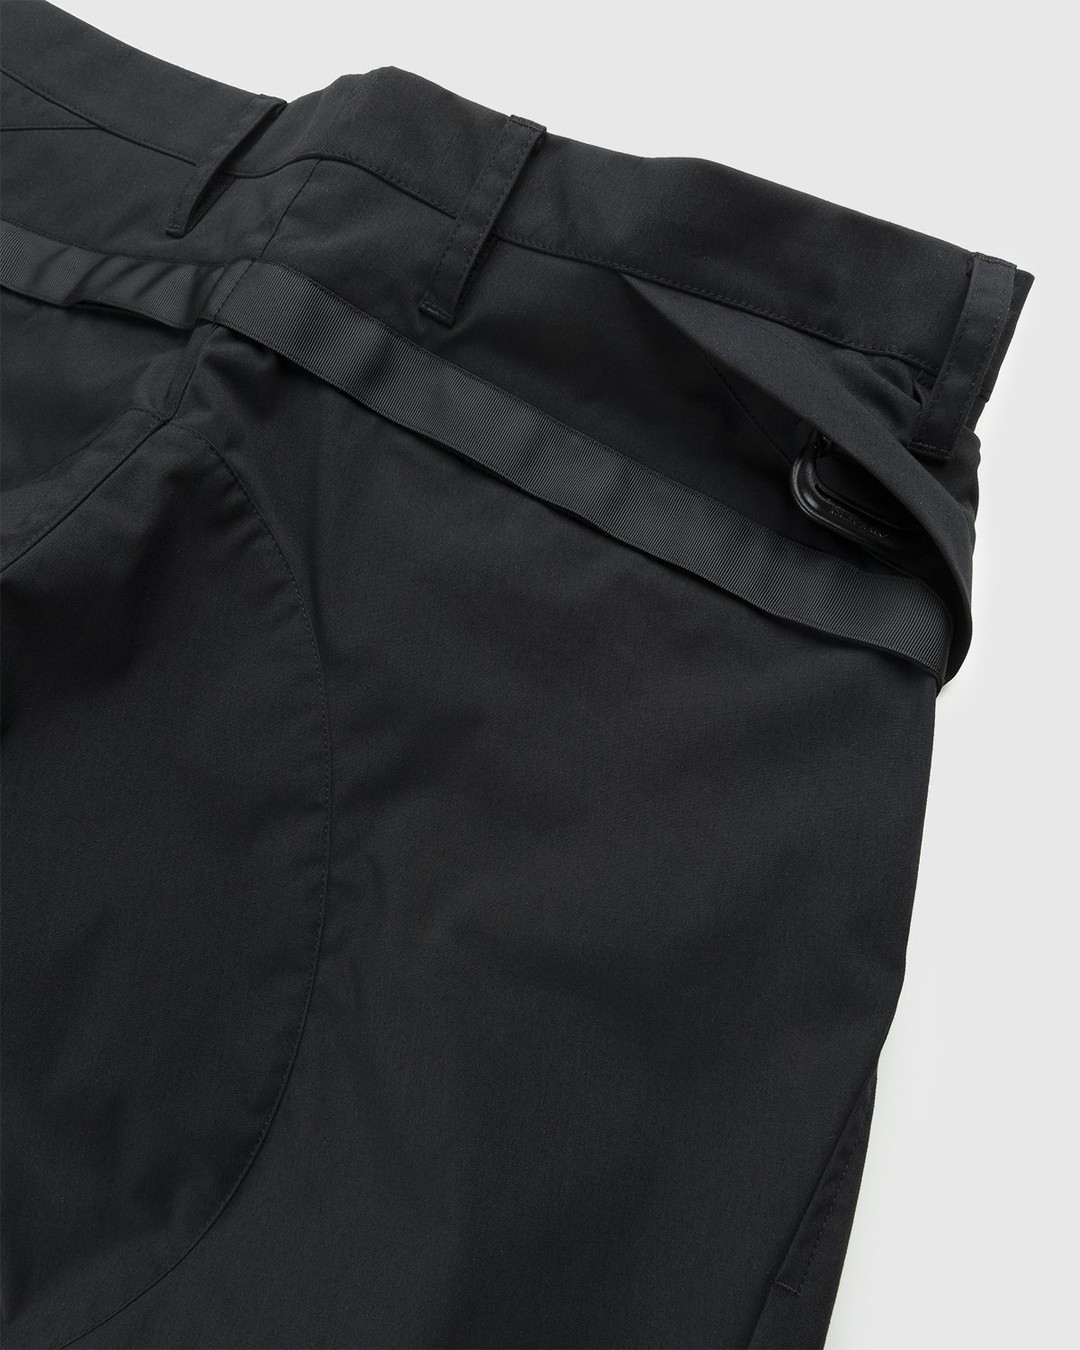 ACRONYM – P10-E Pant Black - Cargo Pants - Black - Image 5